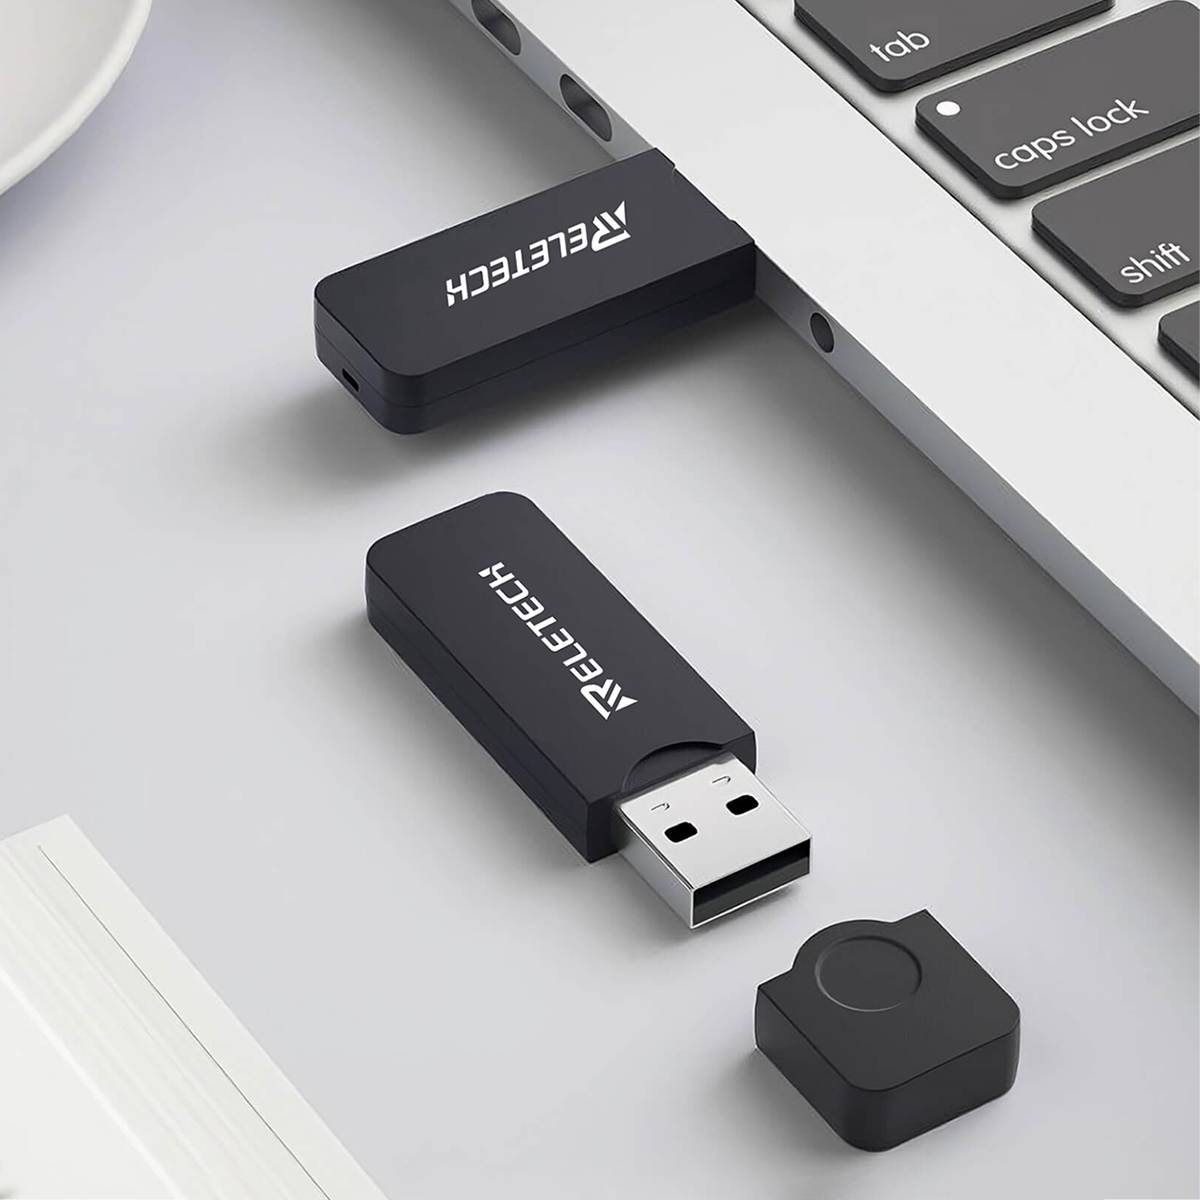 Внешний накопитель Reletech USB FLASH DRIVE T3 16Gb 2.0, черный